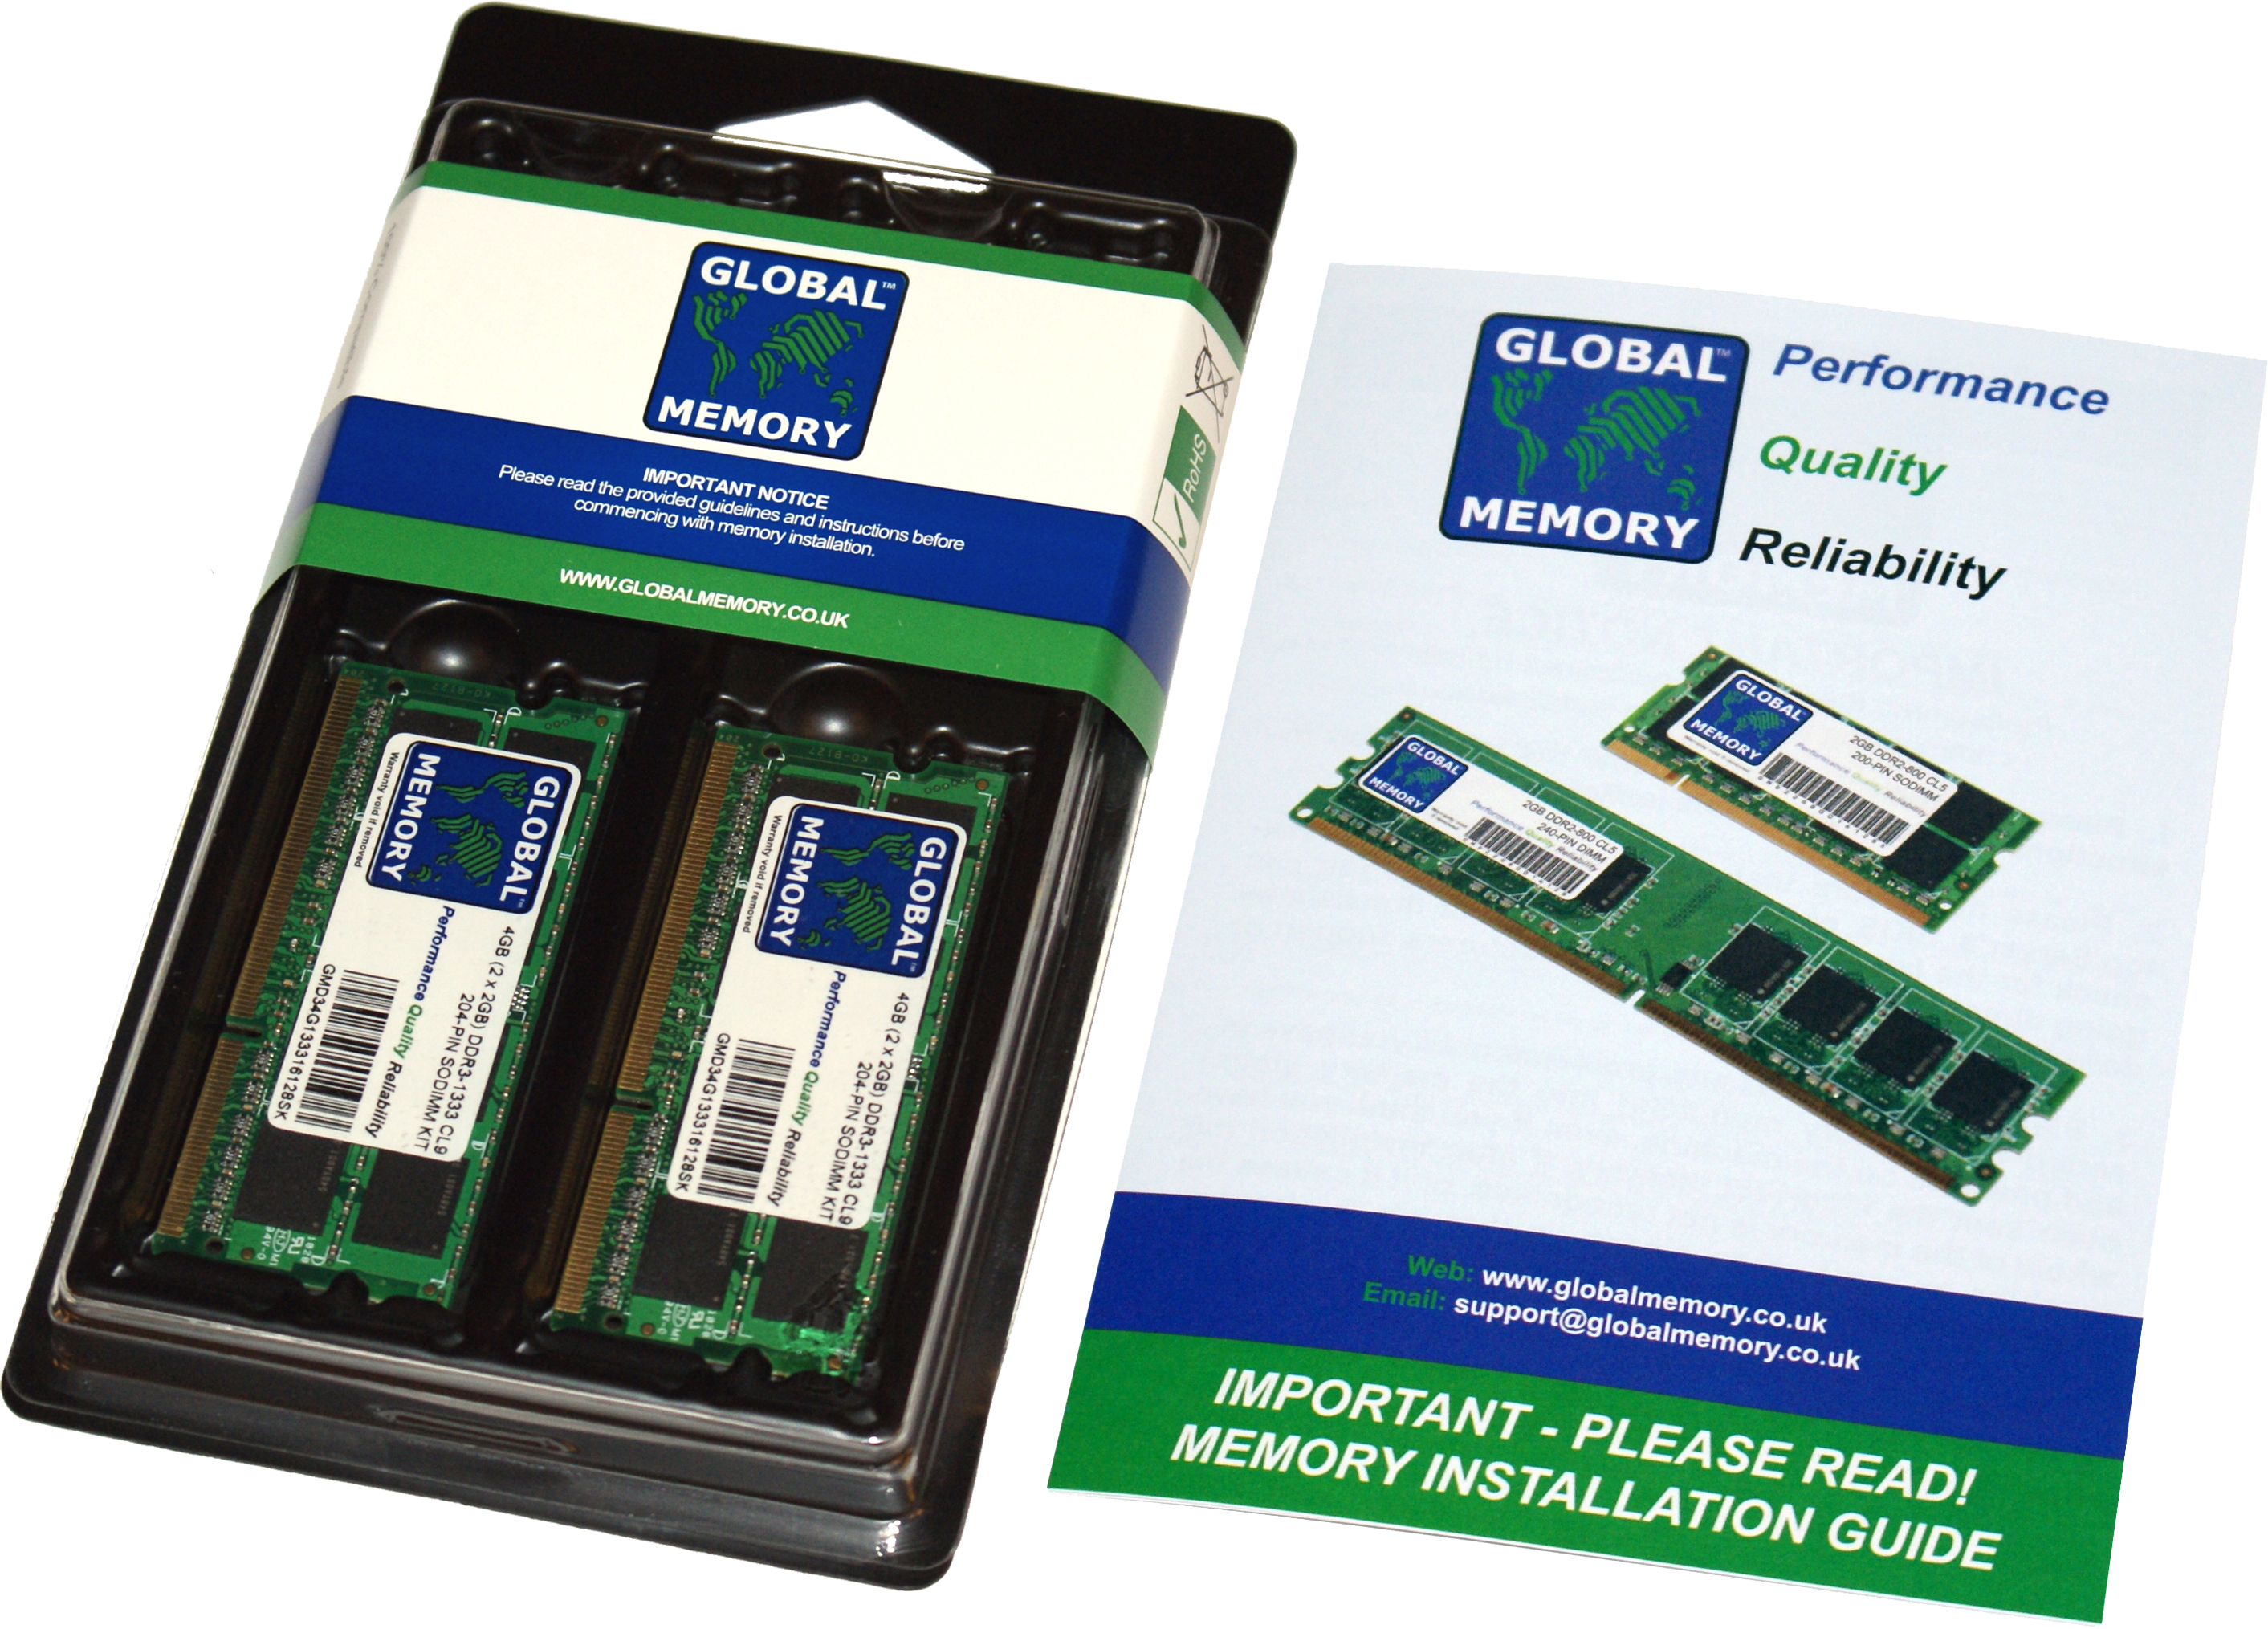 16GB (2 x 8GB) DDR3 1866MHz PC3-14900 204-PIN SODIMM MEMORY RAM KIT FOR SAMSUNG LAPTOPS/NOTEBOOKS